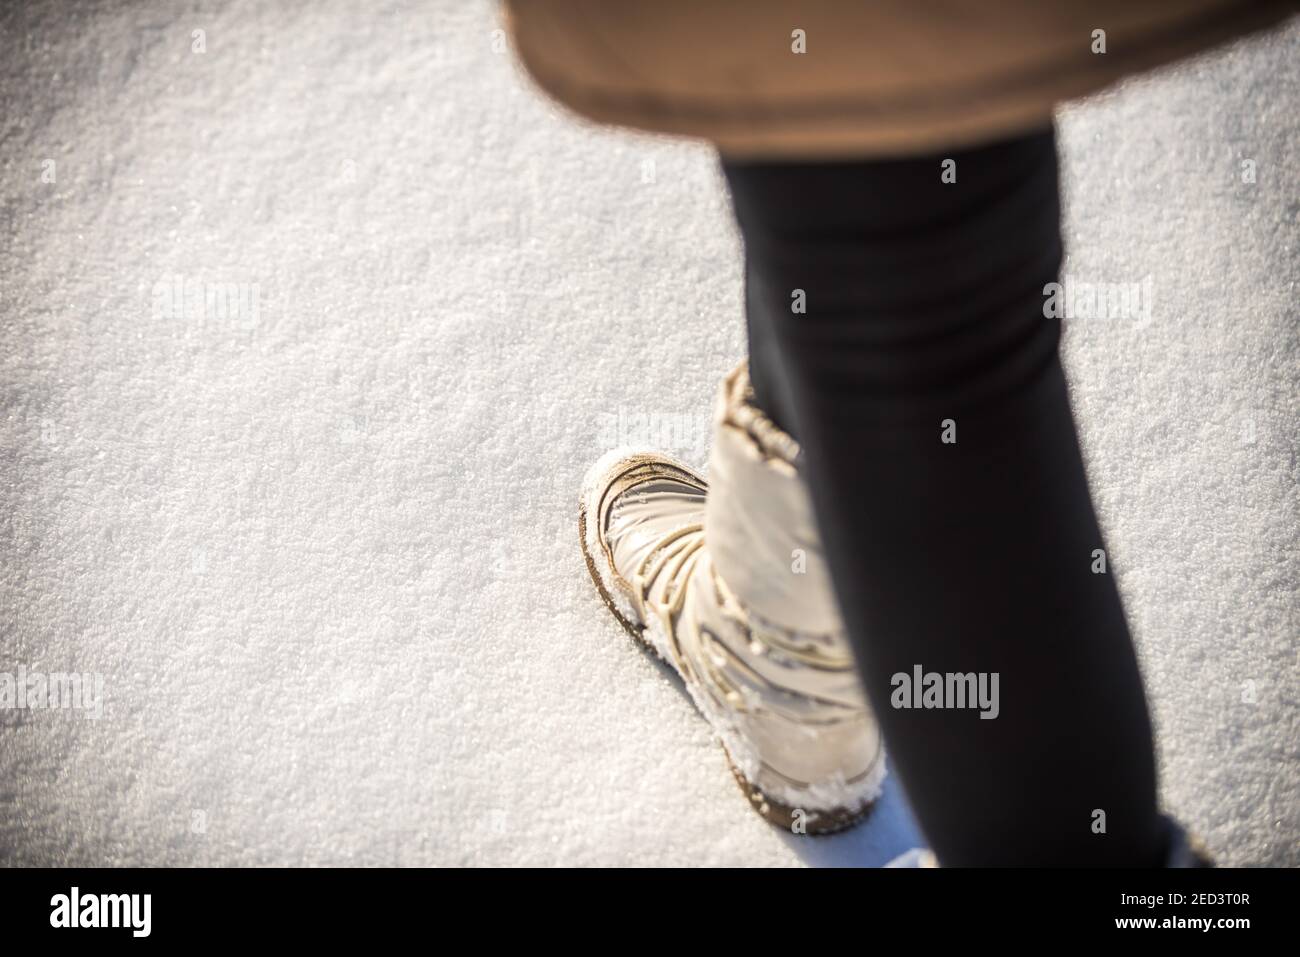 Schuhe im Schnee Foto Stock